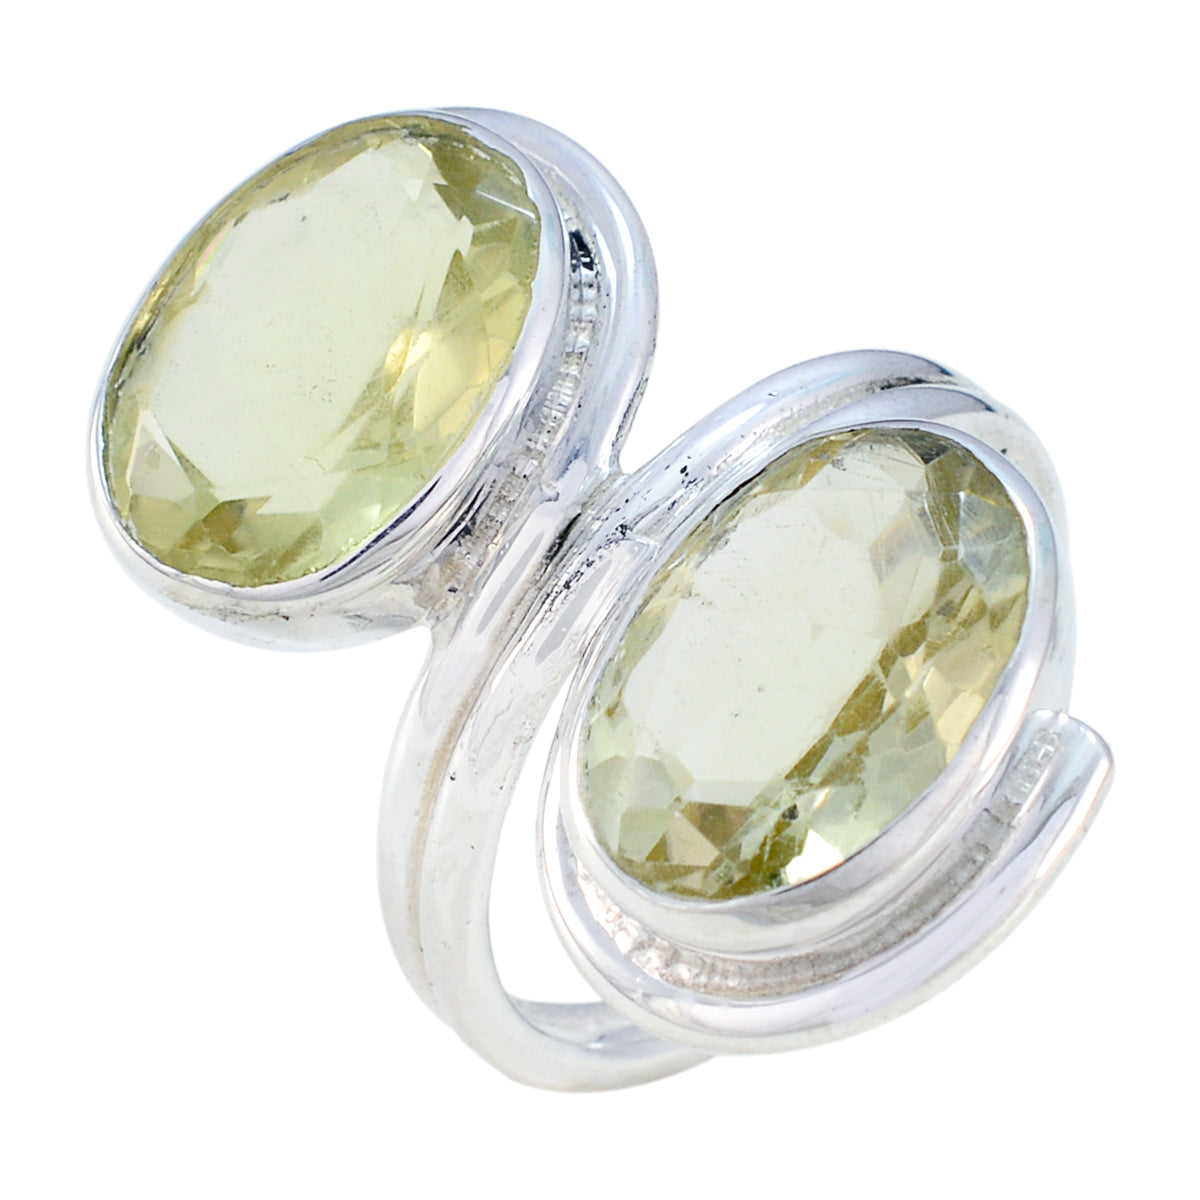 India Gemstones Lemon Quartz Solid Silver Ring Victorian Jewelry